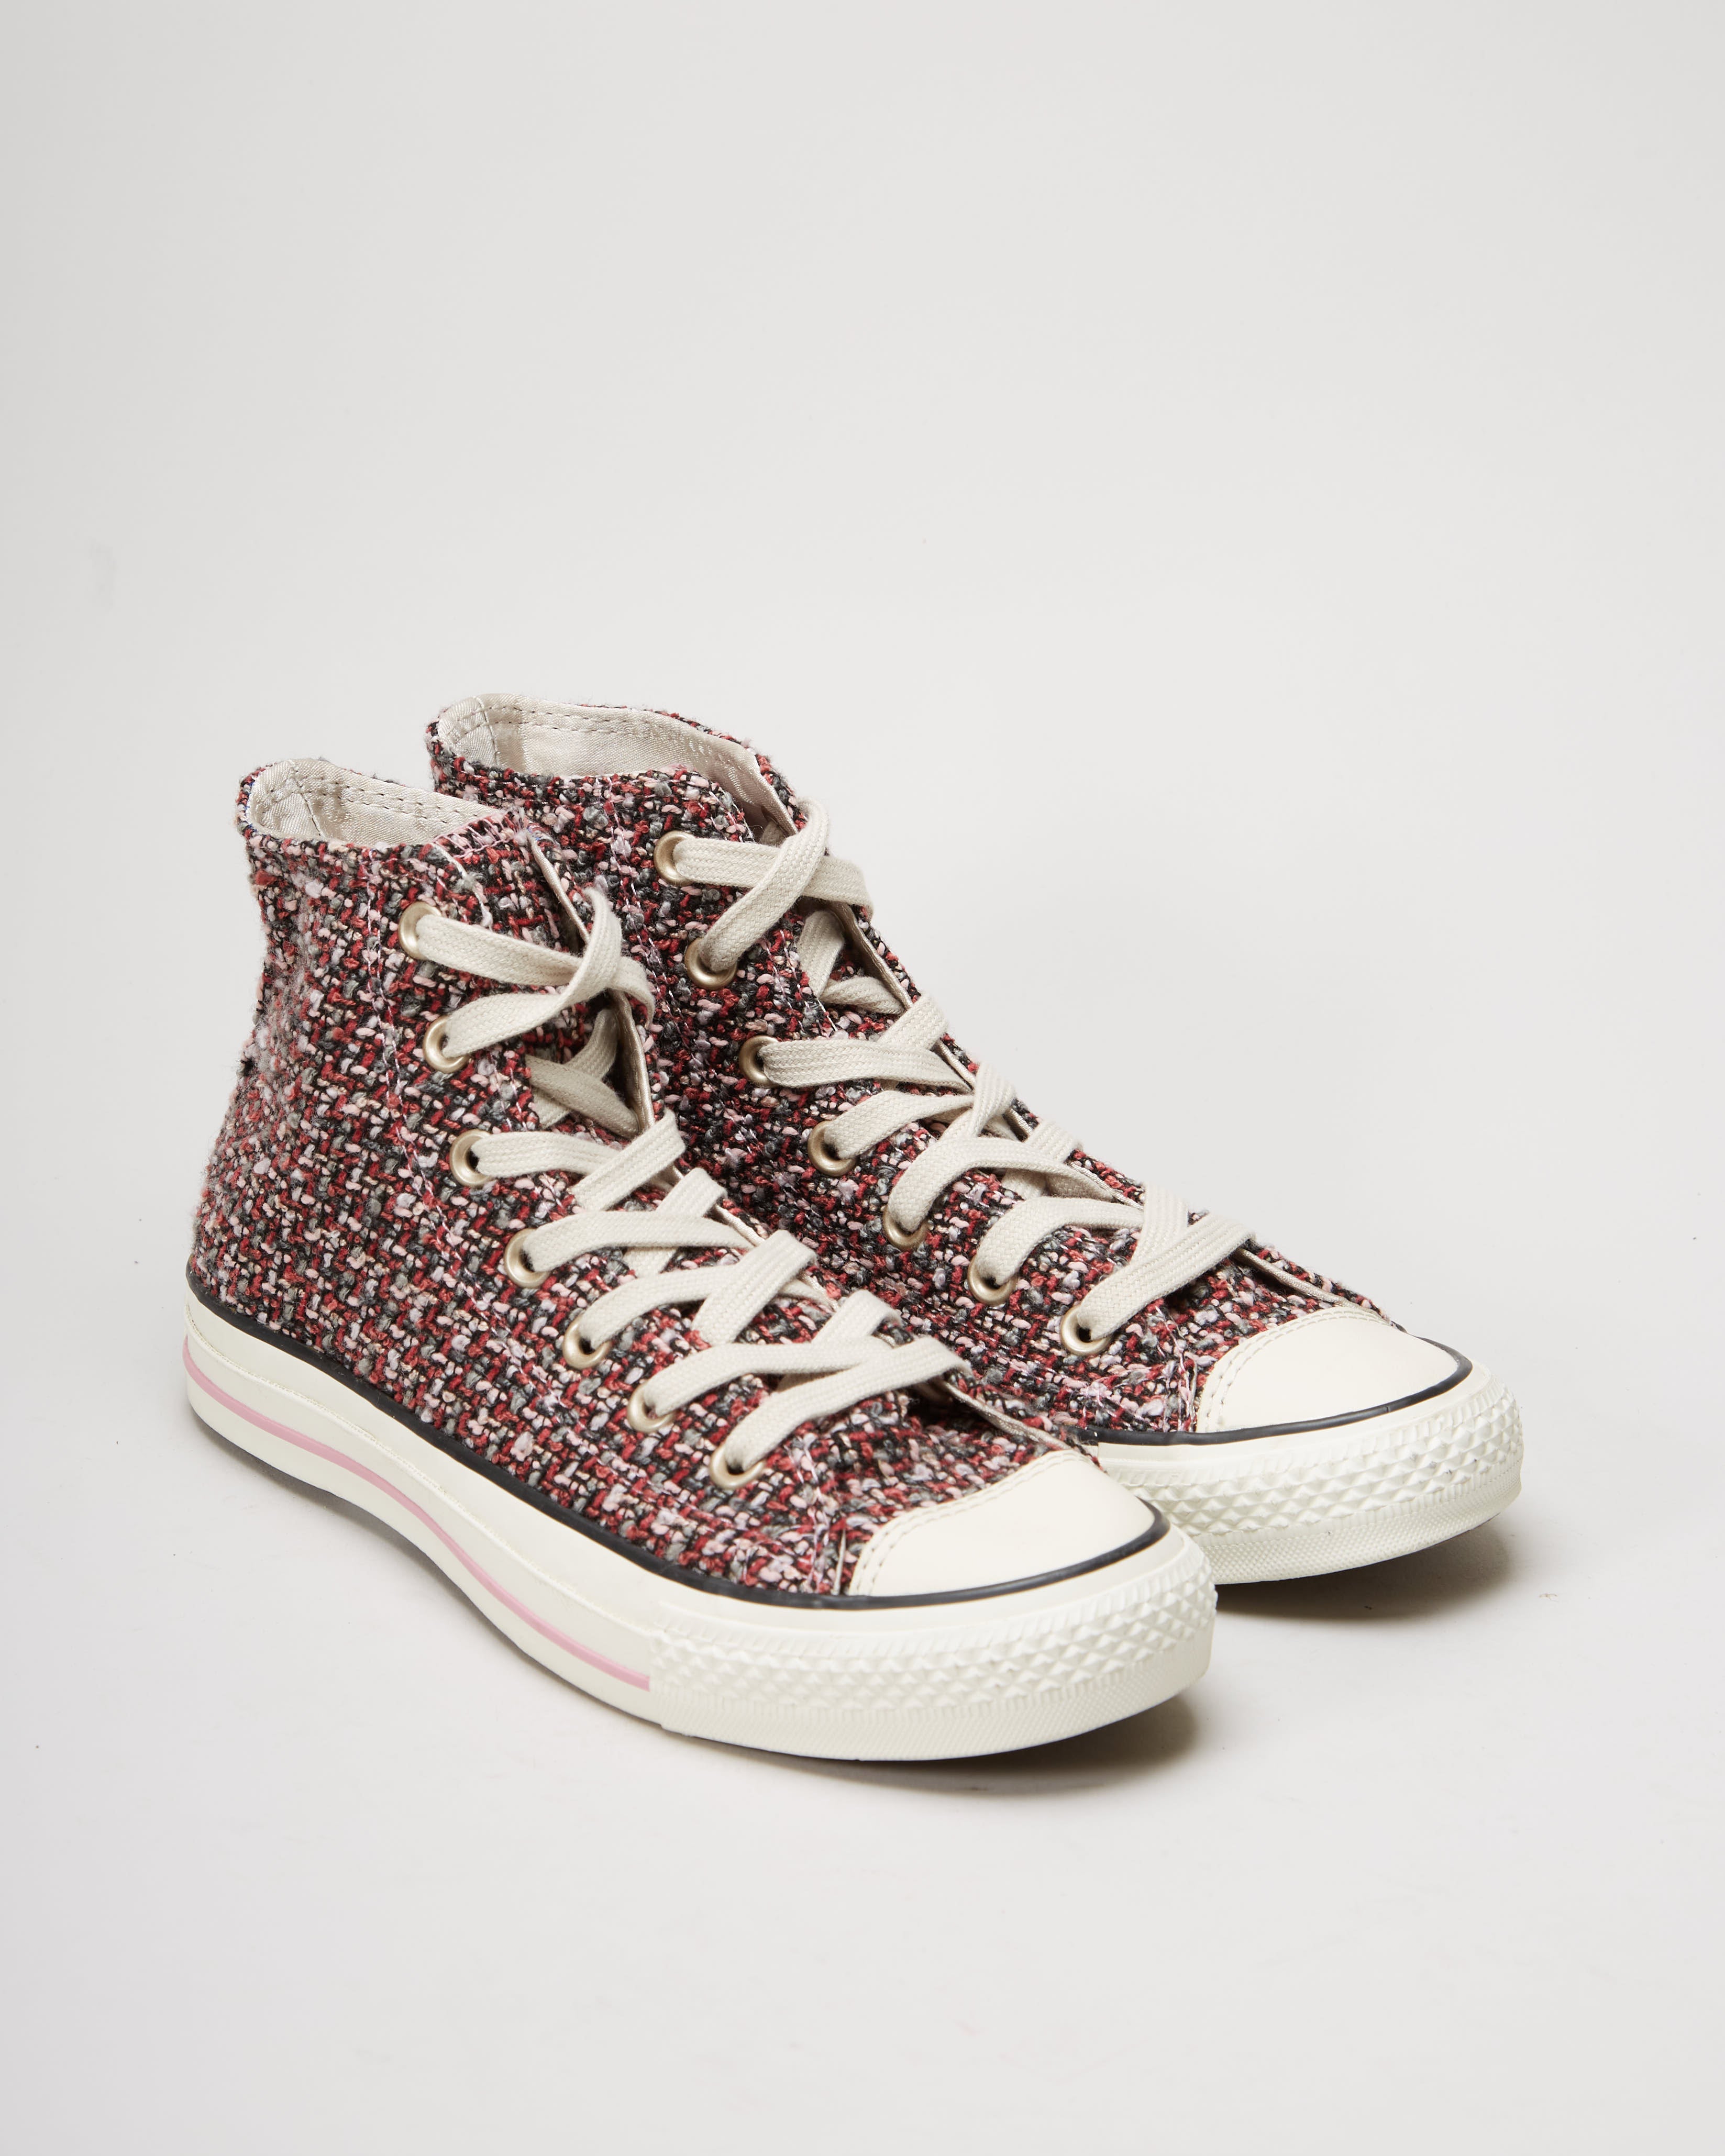 Converse Tweed Pink / Black / Grey High Top Shoes - UK 5